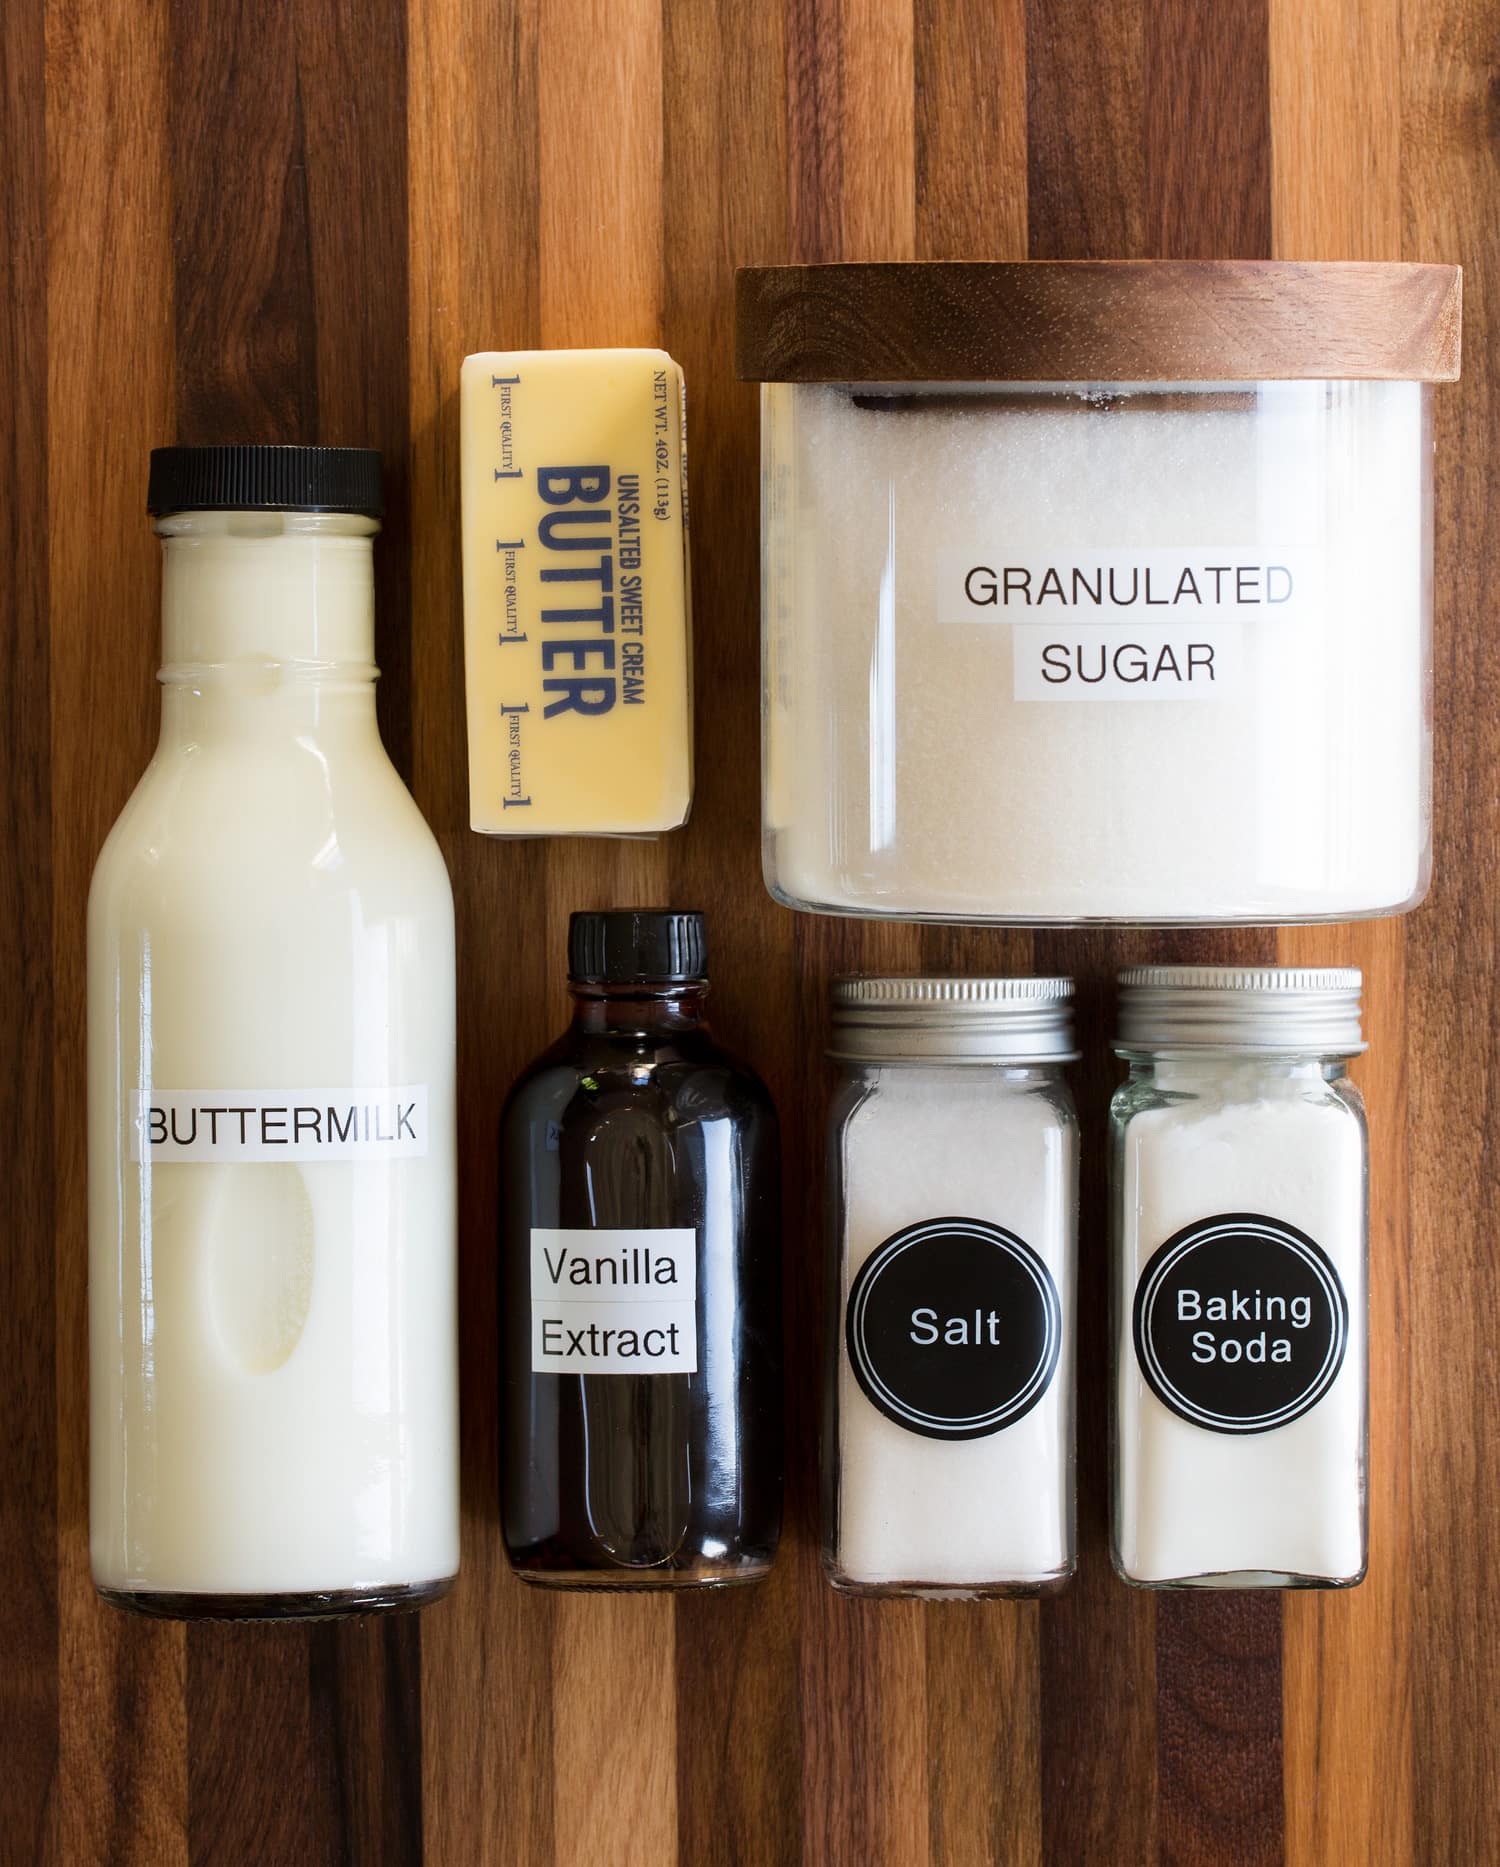 Ingredients needed to make buttermilk syrup shown including sugar, buttermilk, baking soda, salt, vanilla and butter.